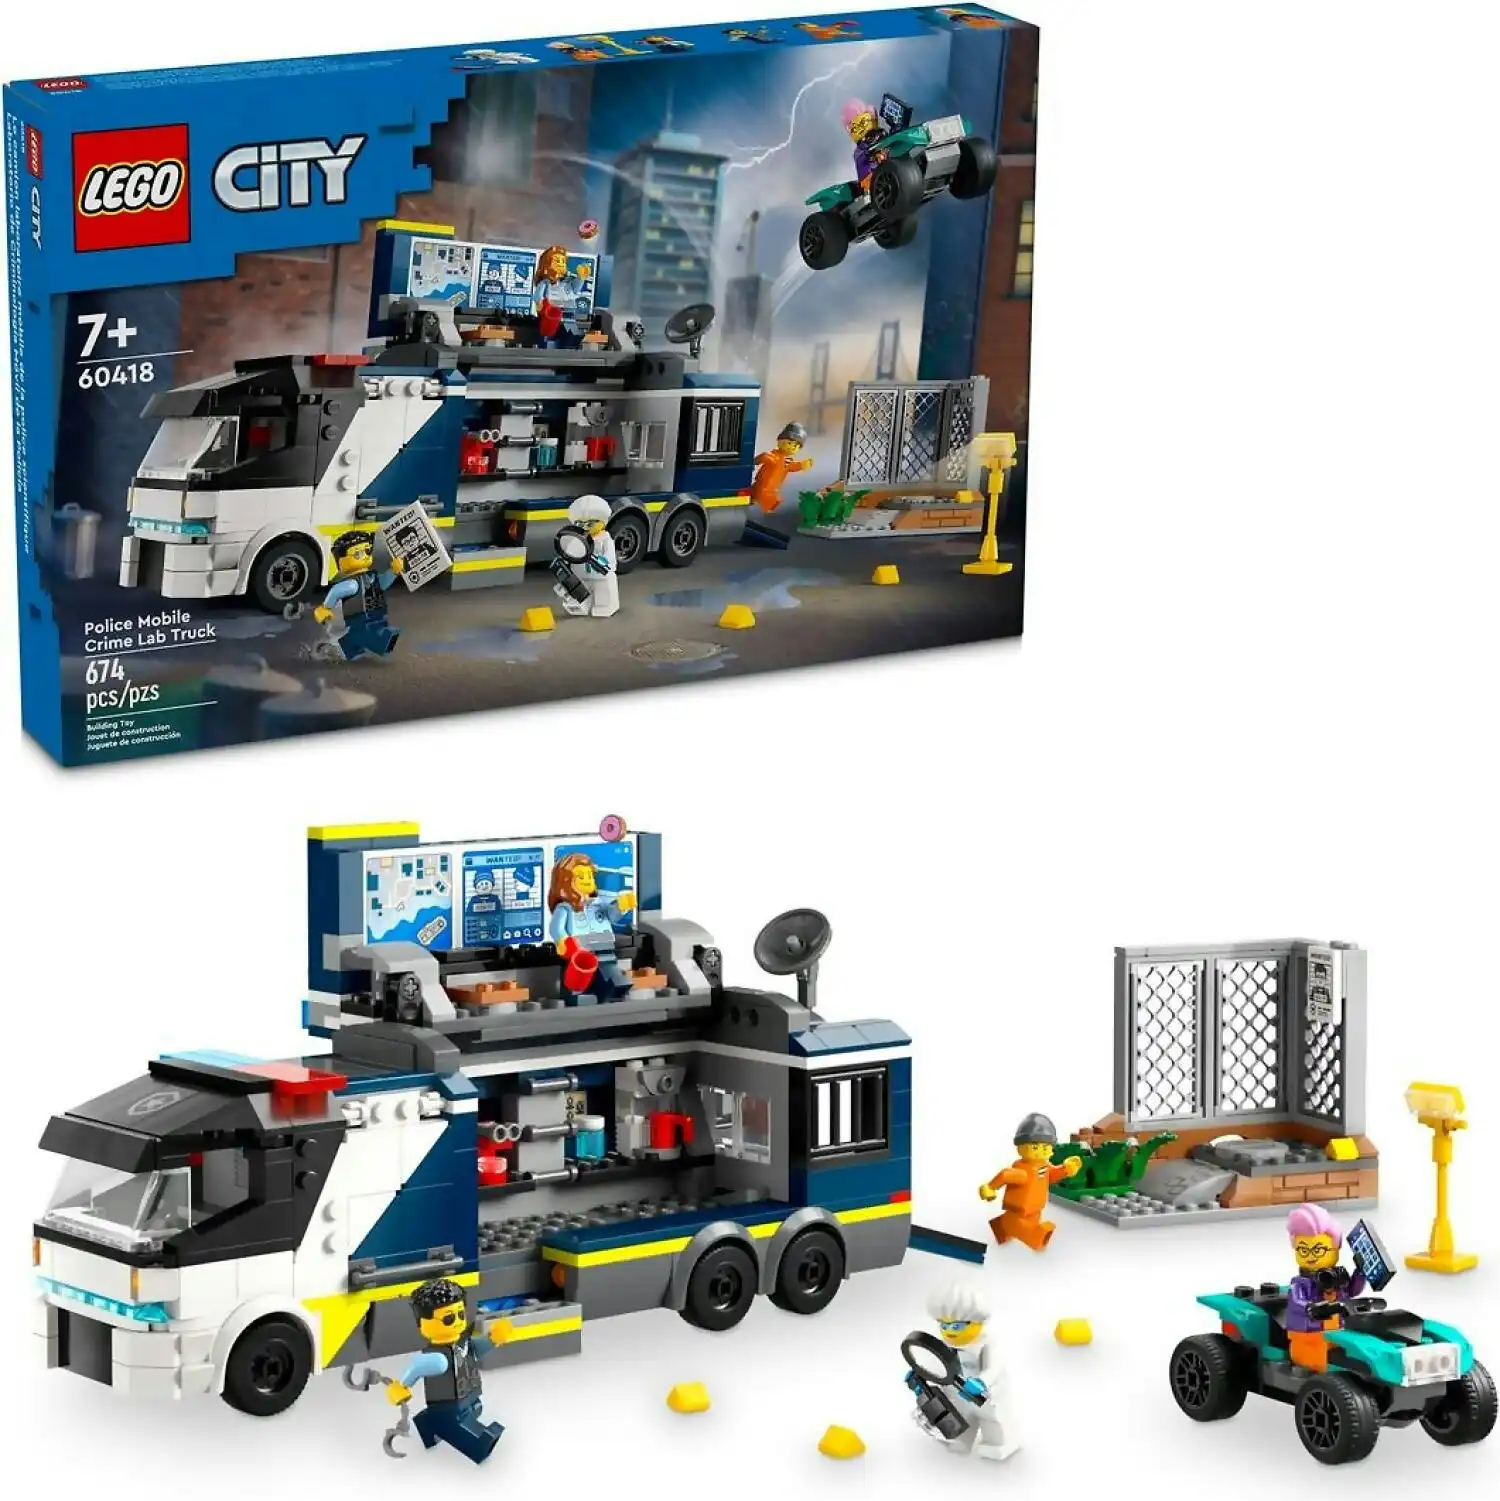 LEGO 60418 Police Mobile Crime Lab Truck - City